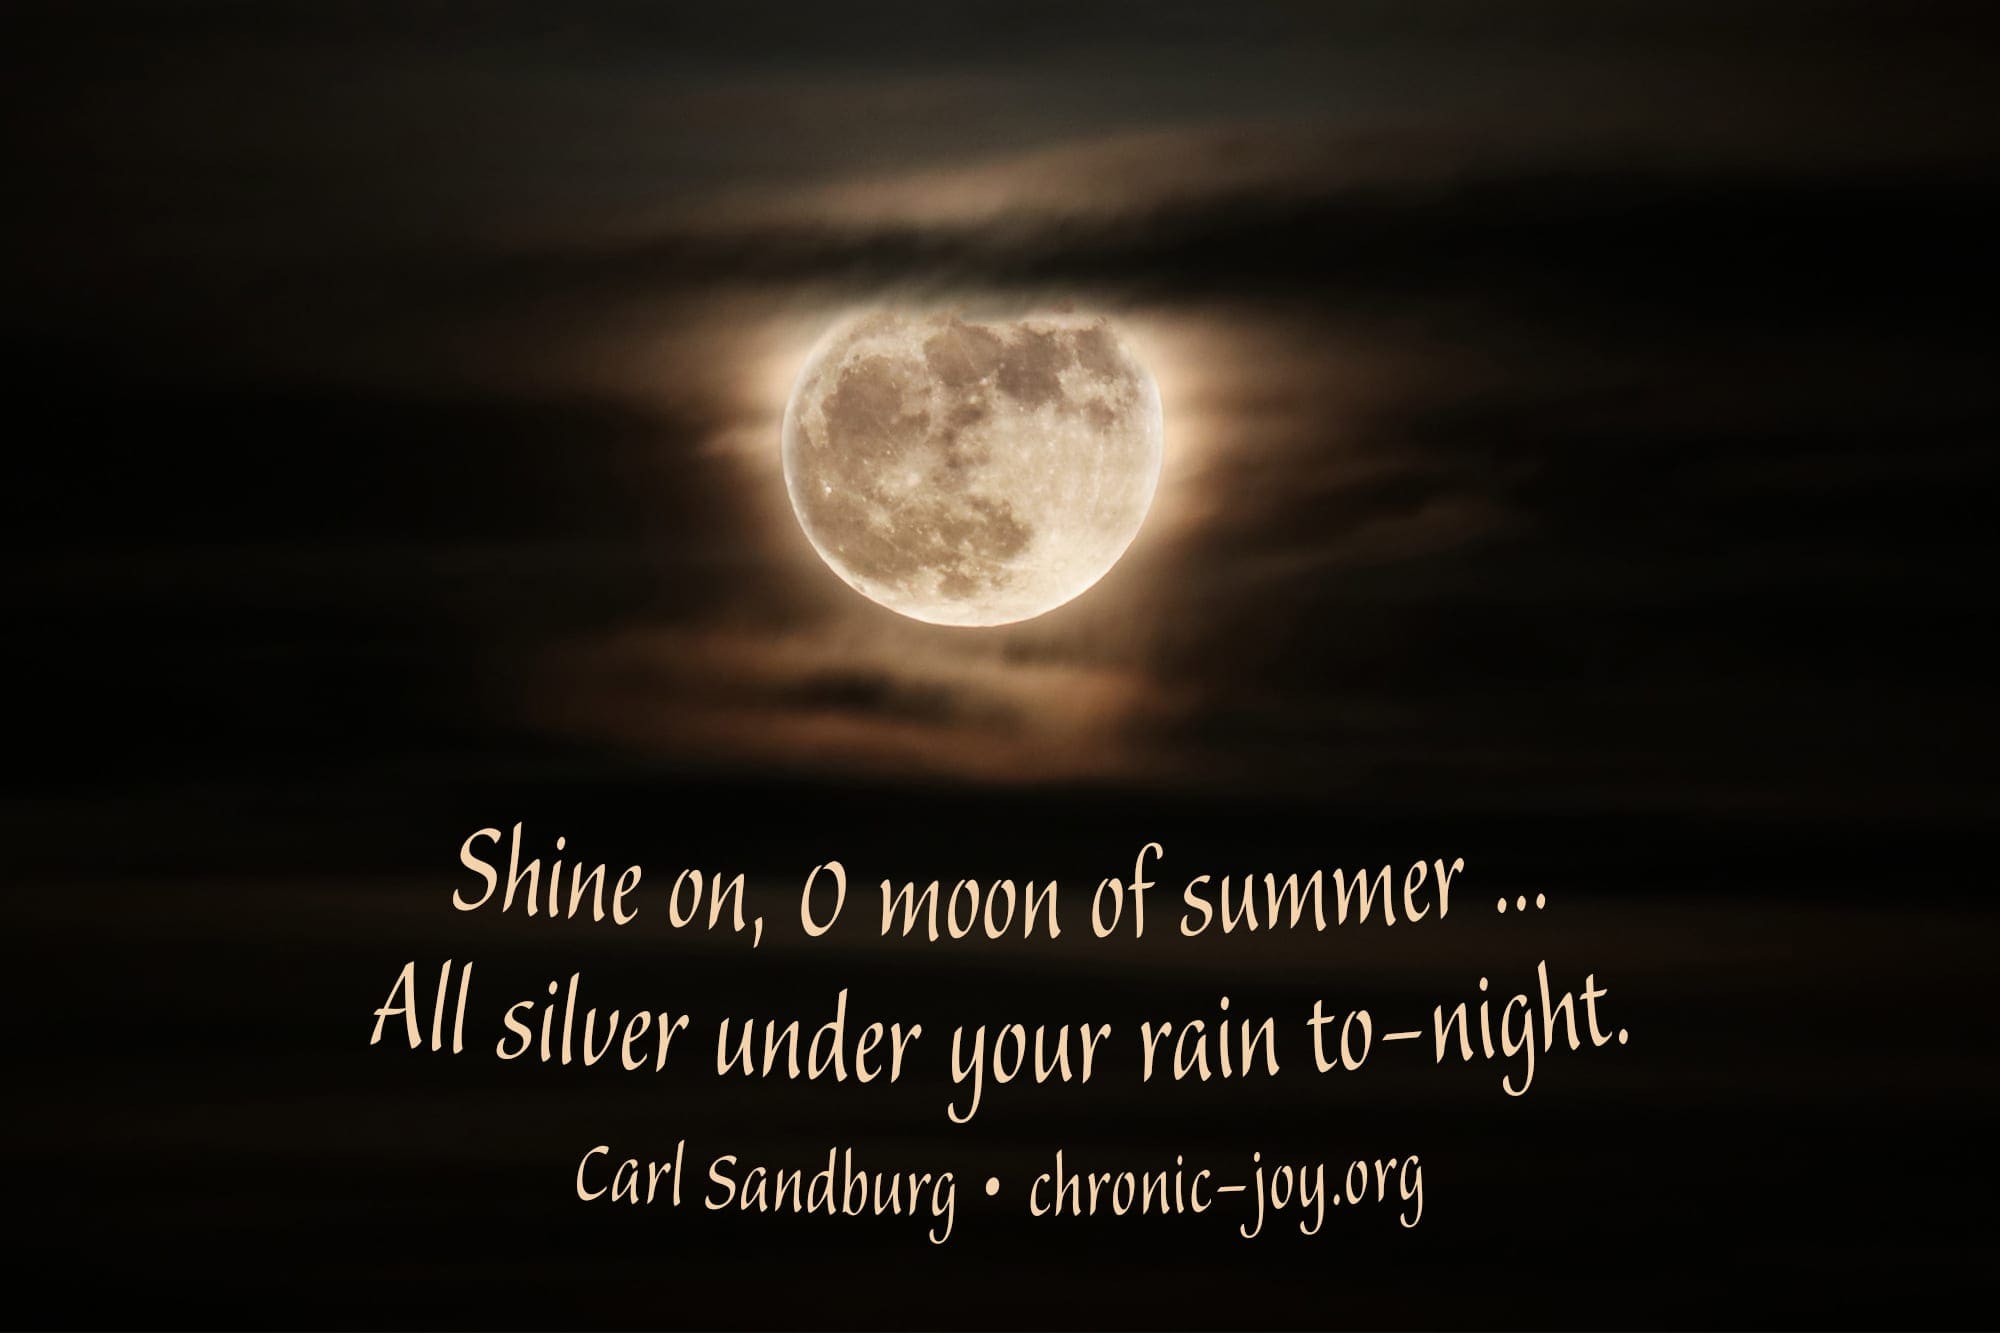 "Shine on, O moon of summer ... All silver under your rain to-night." Carl Sandburg